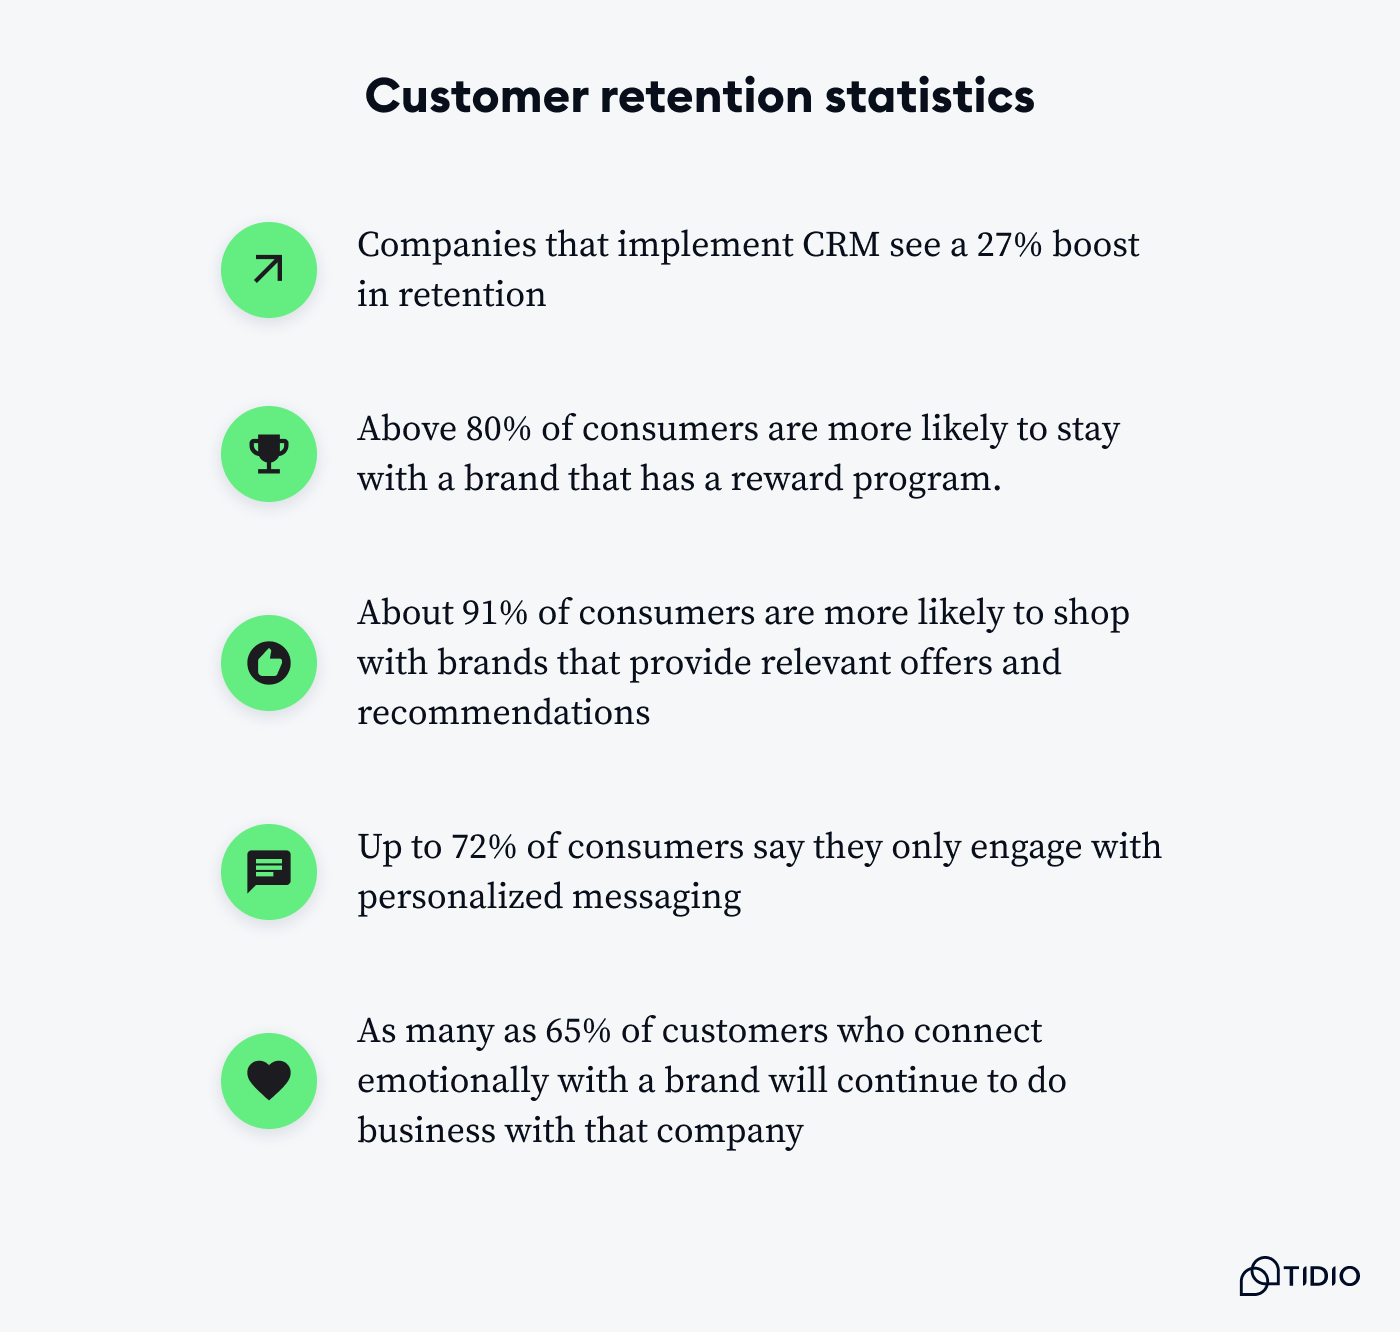 customer retention stats on image